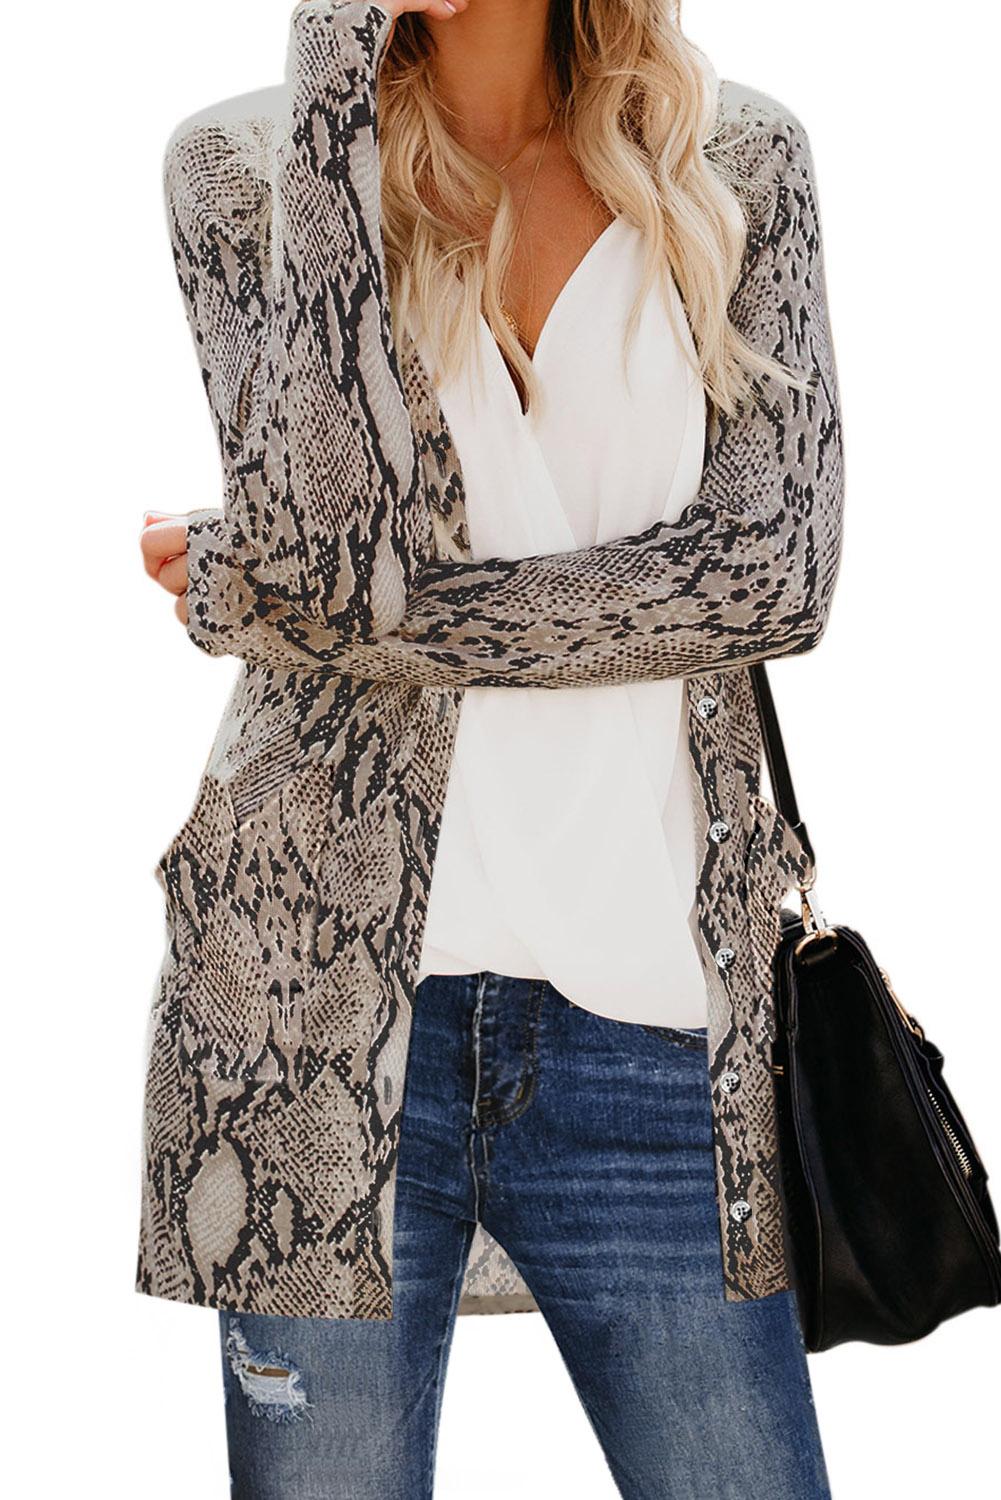 $ 50 - Asvivid Womens Leopard Print Long Sleeve Button Down Open Front ...